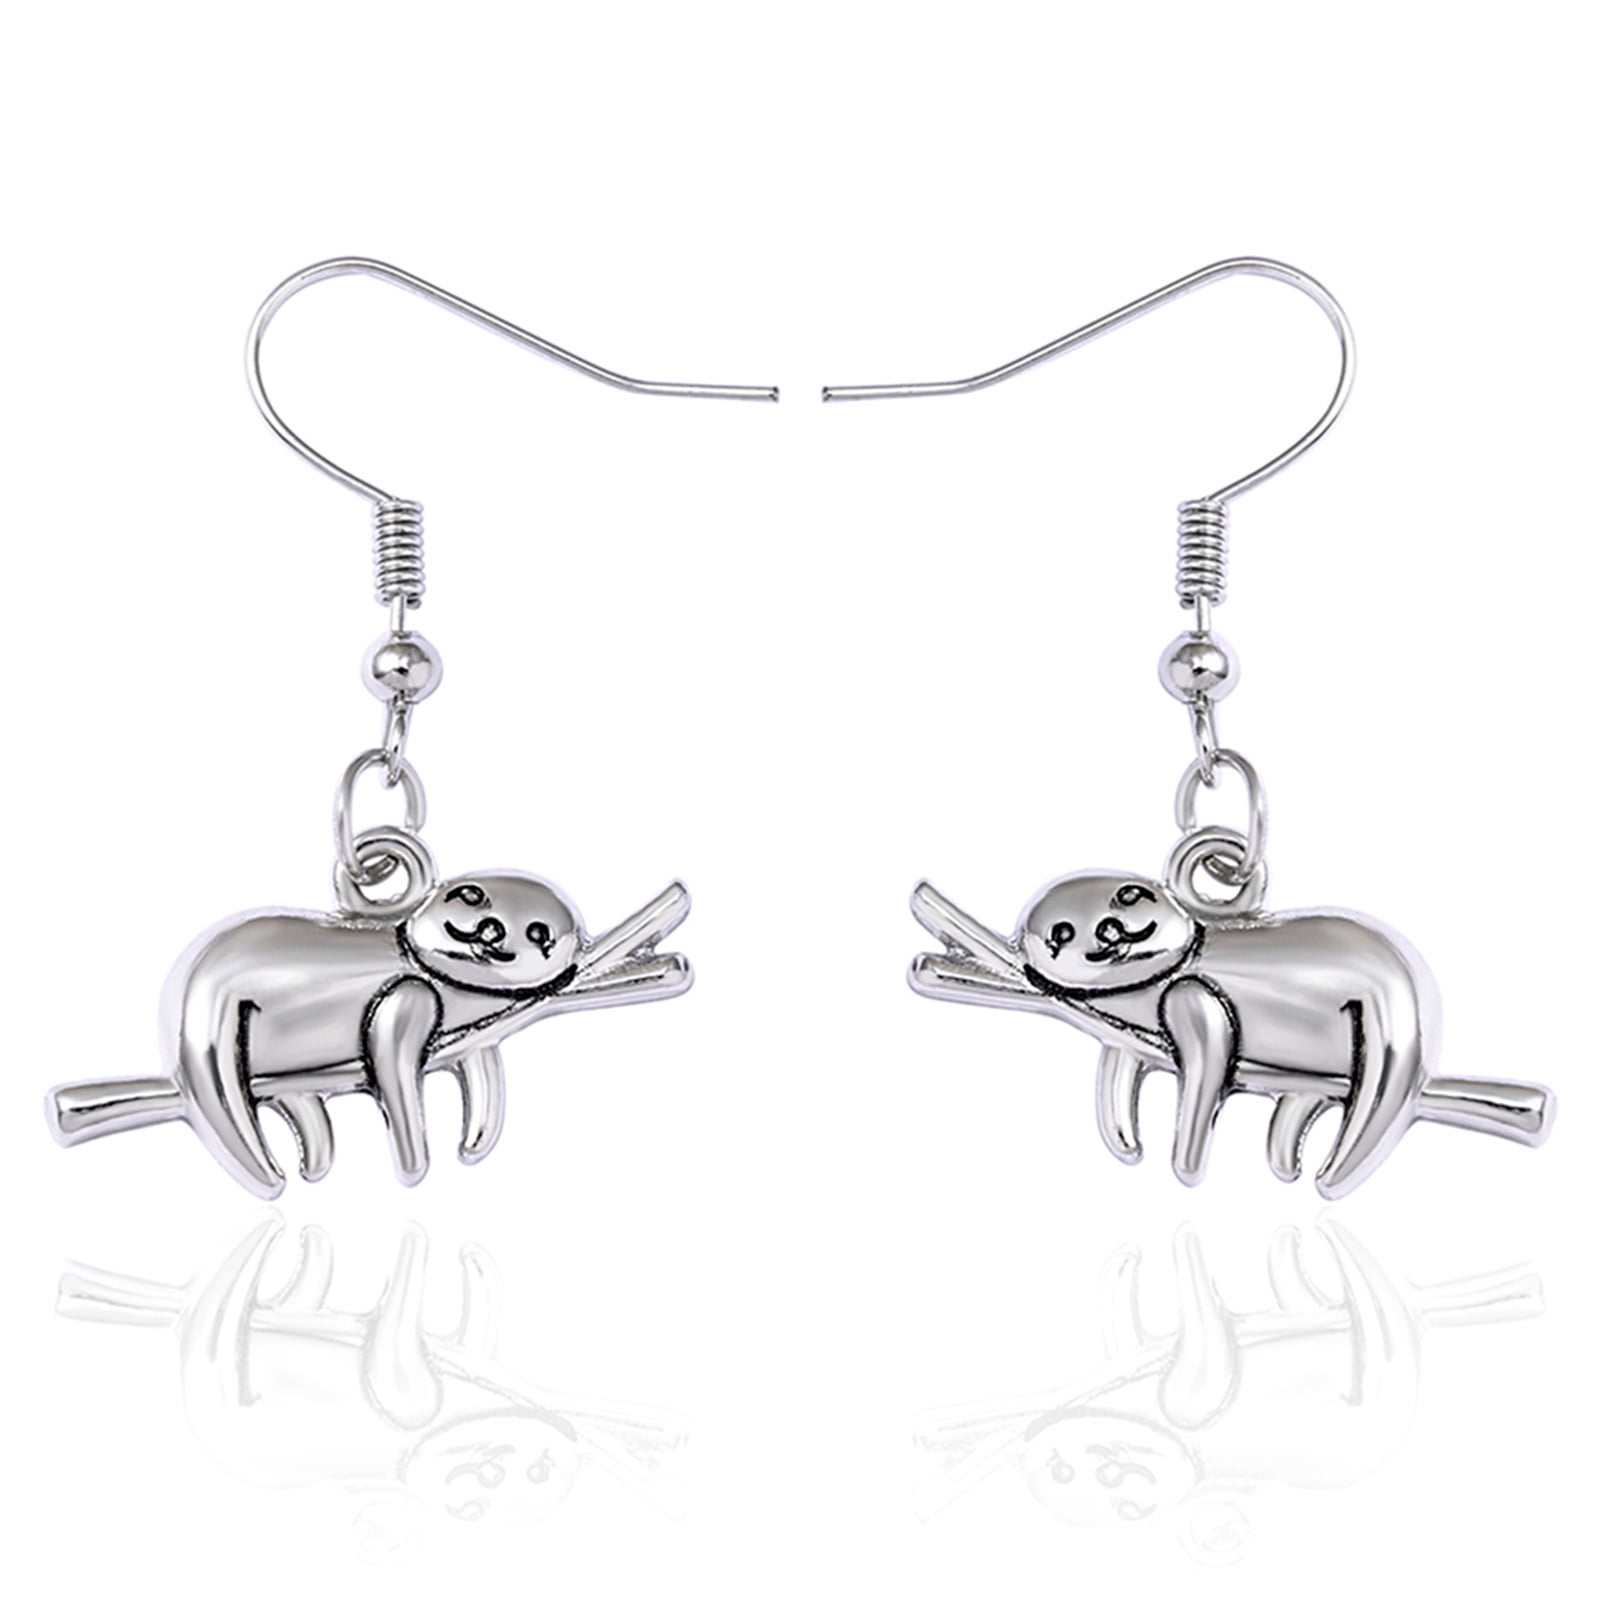 PWFE Sloth Earrings Small Animal Cartilage Stud Earrings Jewelry gift for  Women Girls 